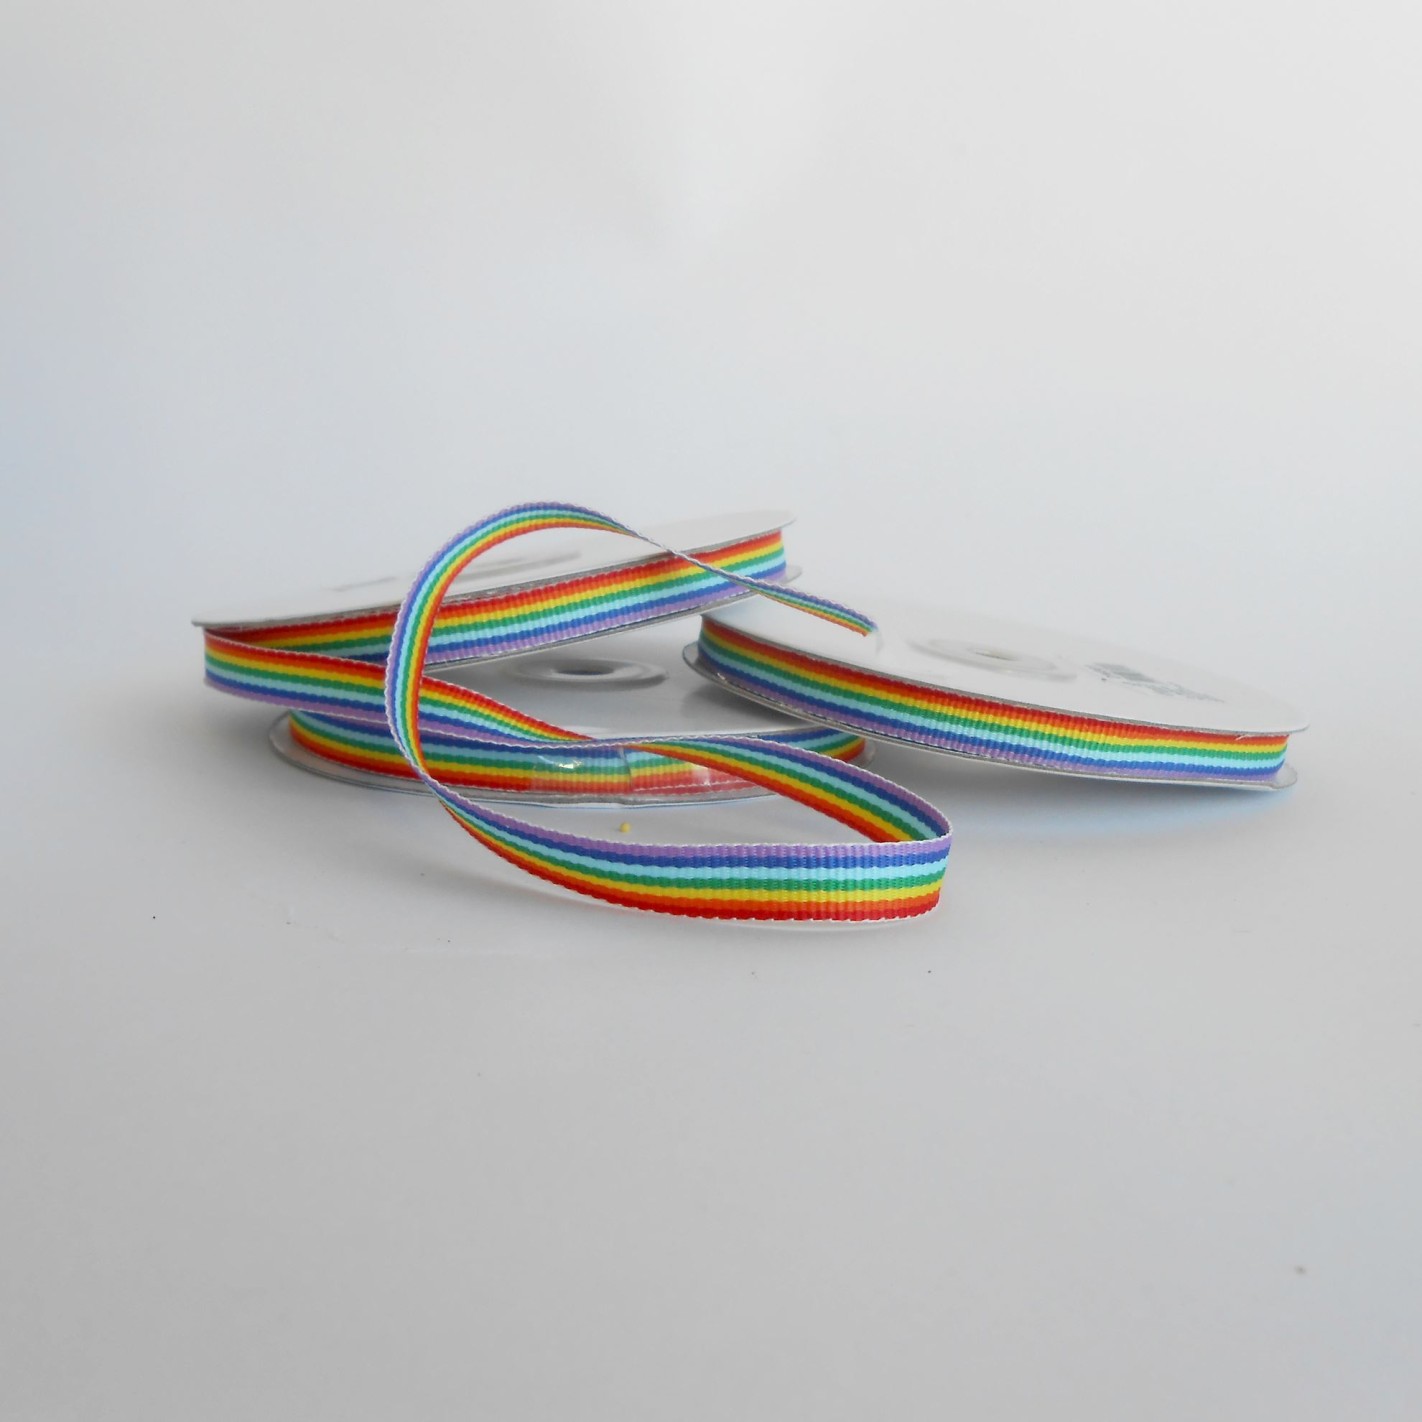 Rotolo Nastro tessuto multicolore arcobaleno cm 1 x 25 mt wedding